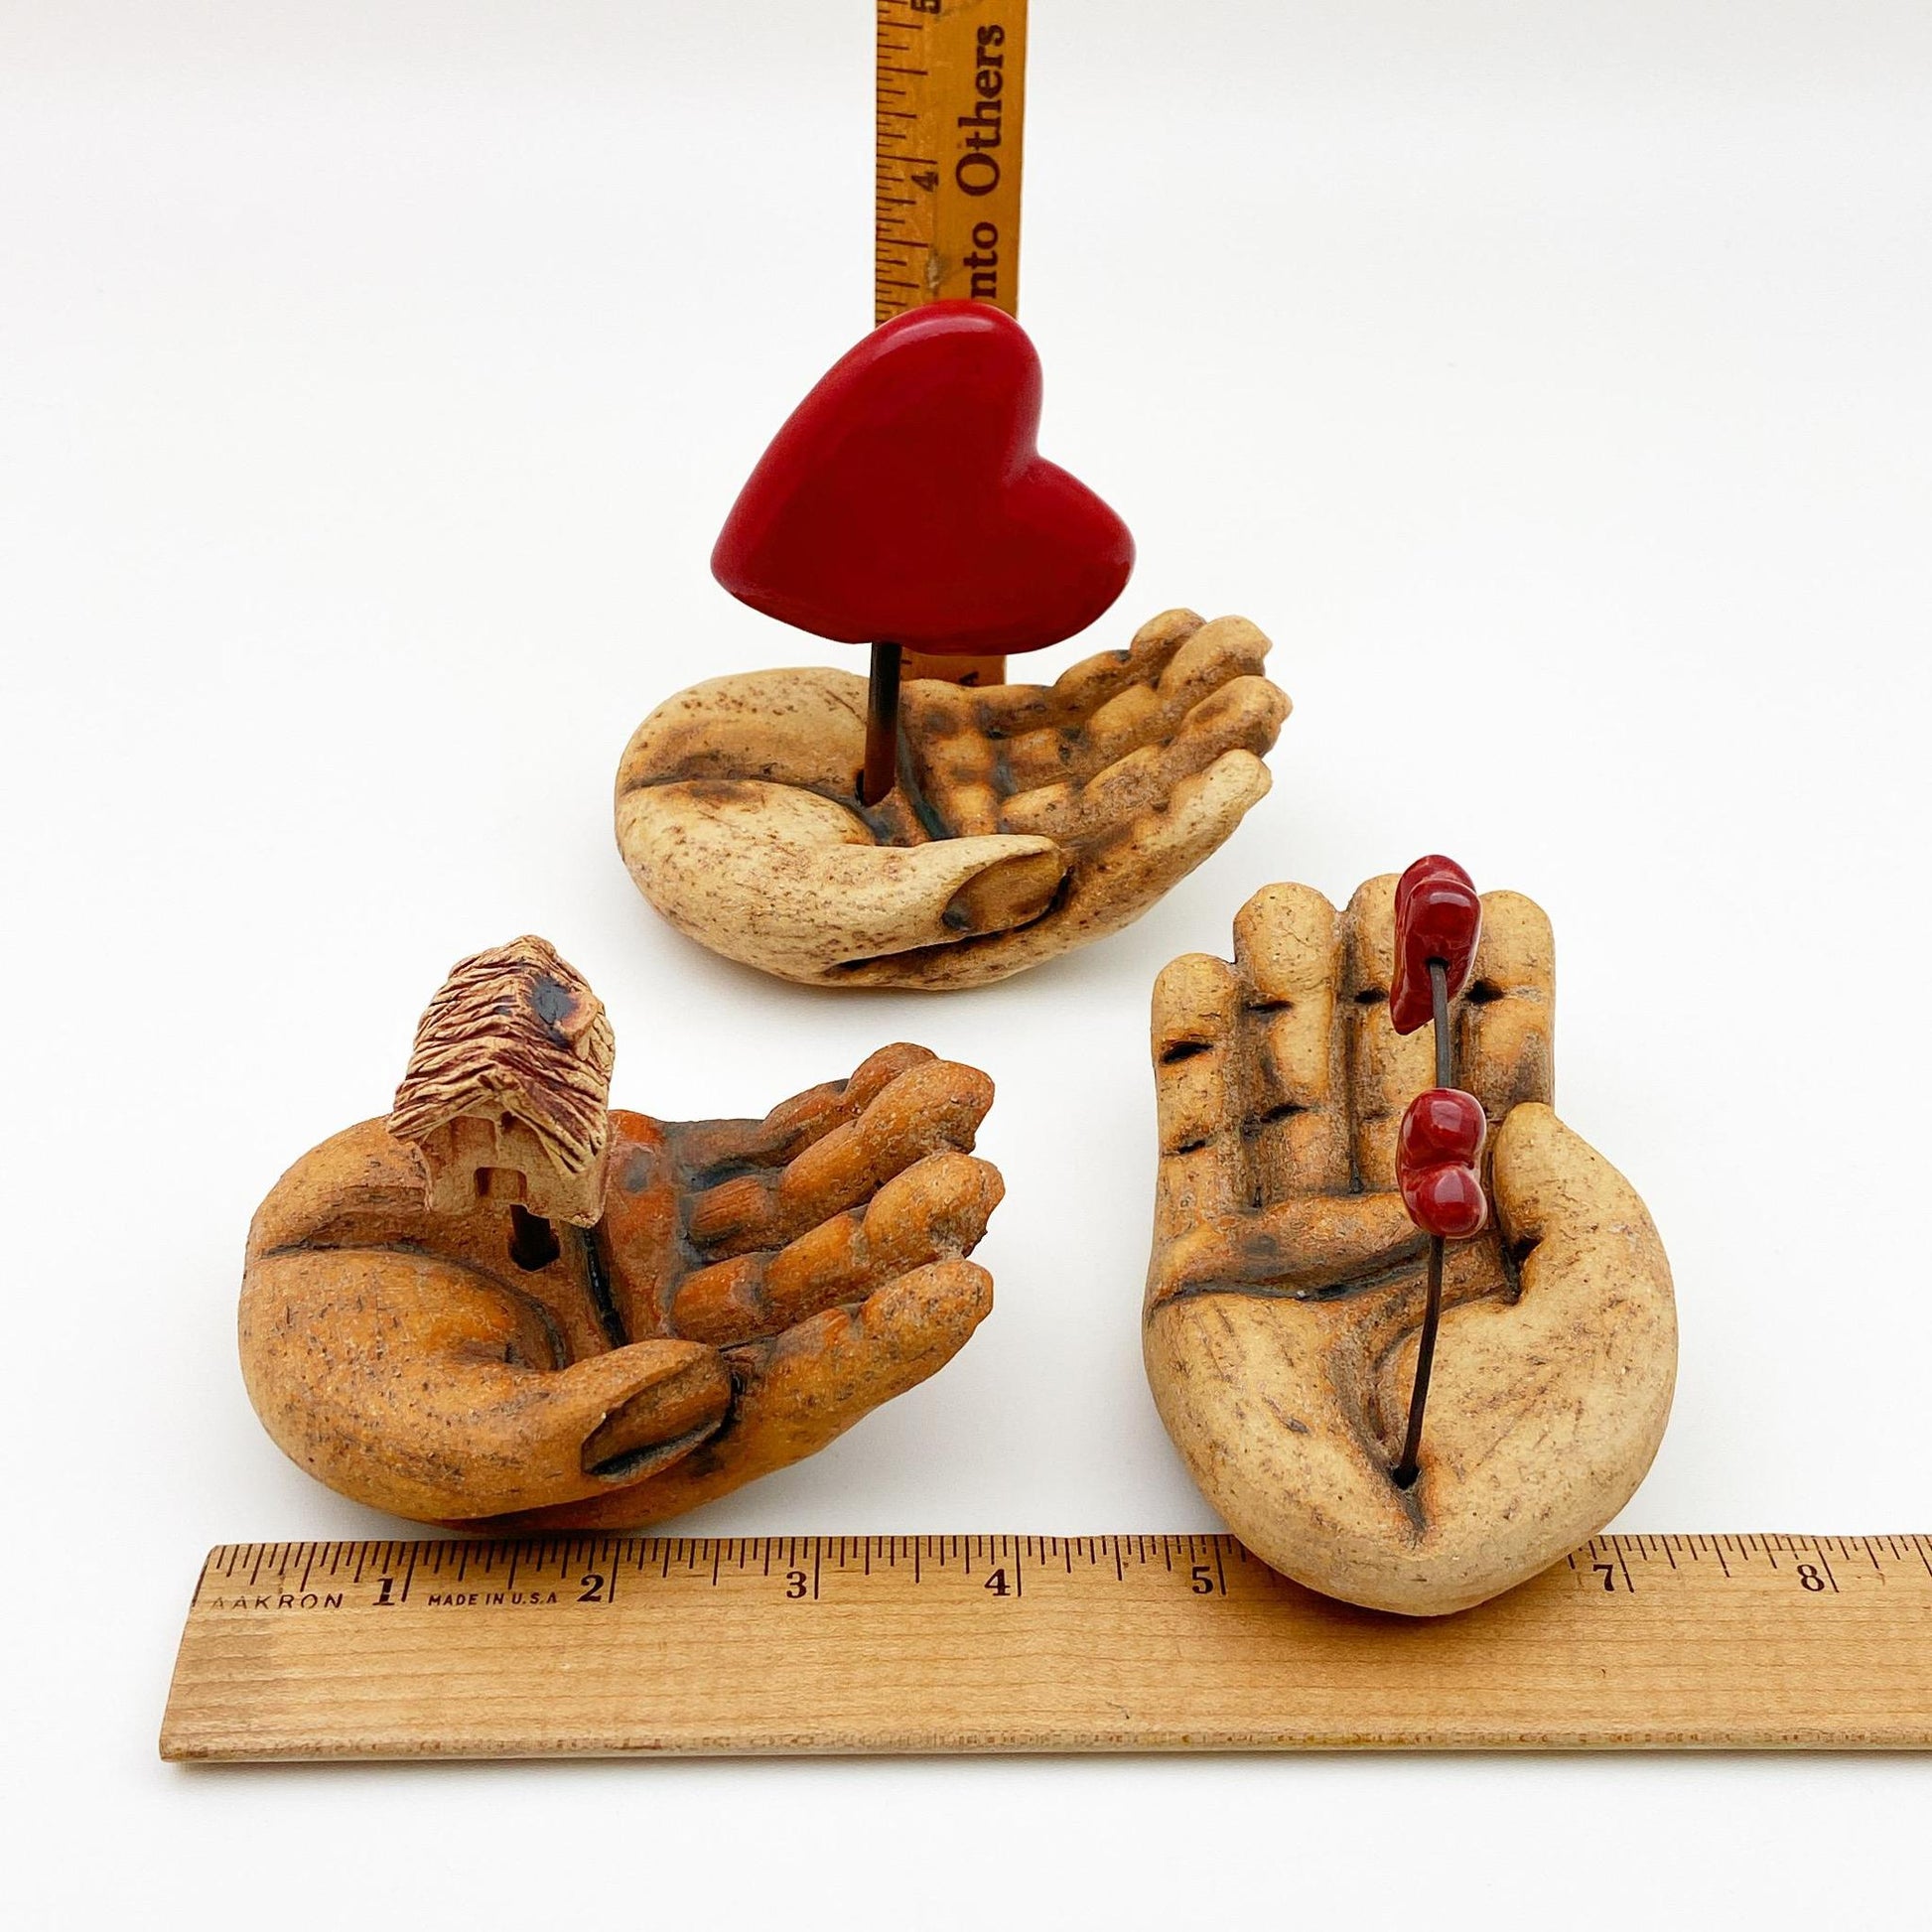 Sculpture - Heart in Hand - Ceramic